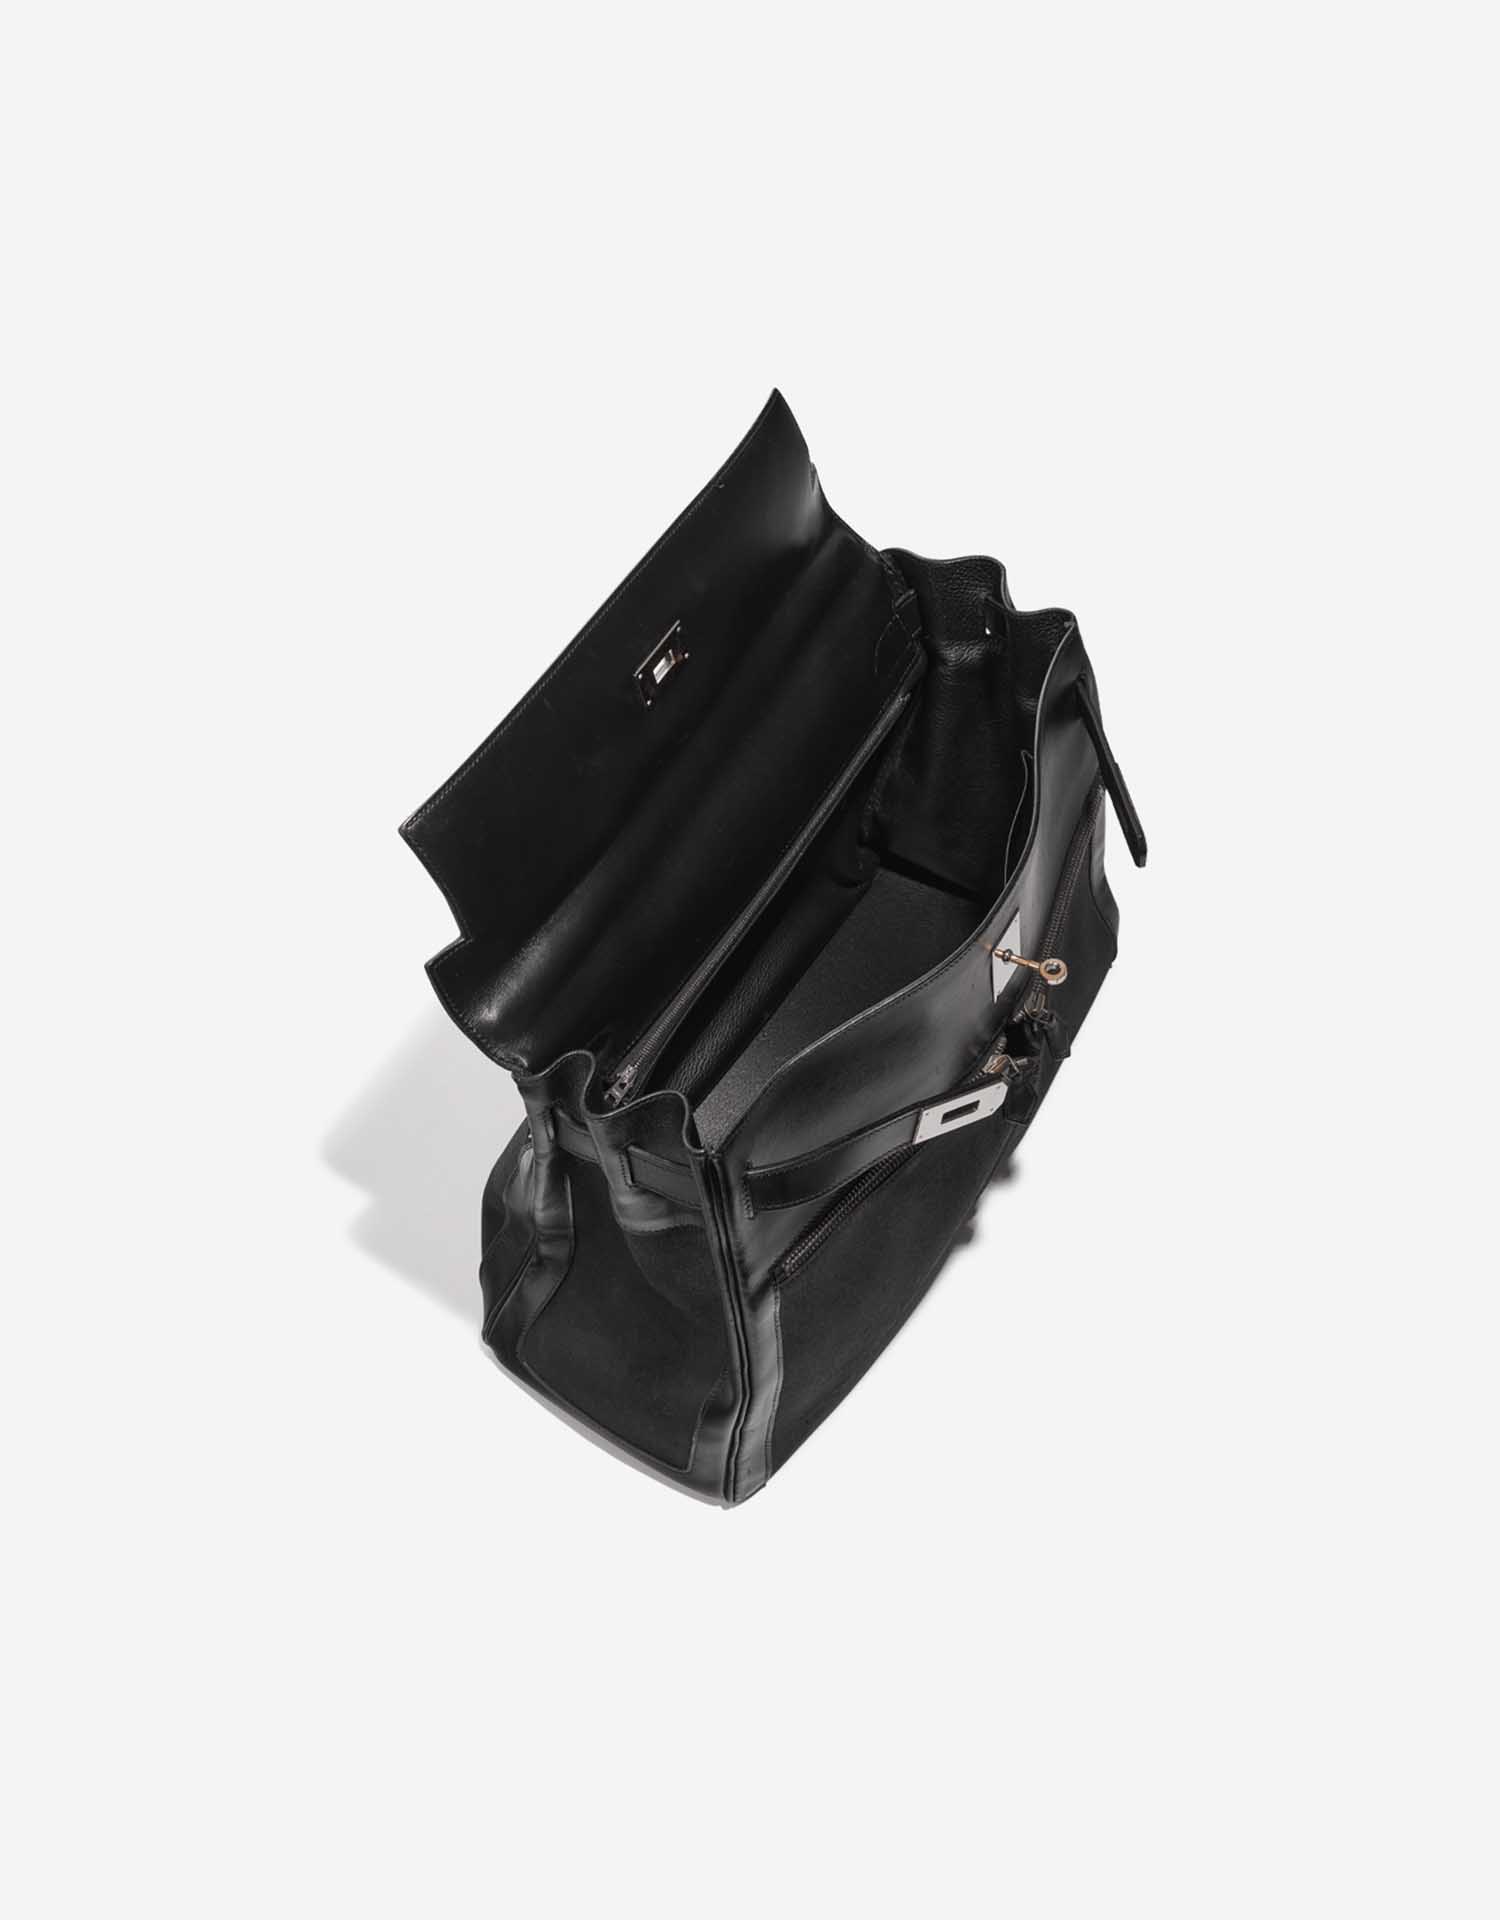 Pre-owned Hermès bag Kelly Lakis 40 Toile / Box Black Black Inside | Sell your designer bag on Saclab.com